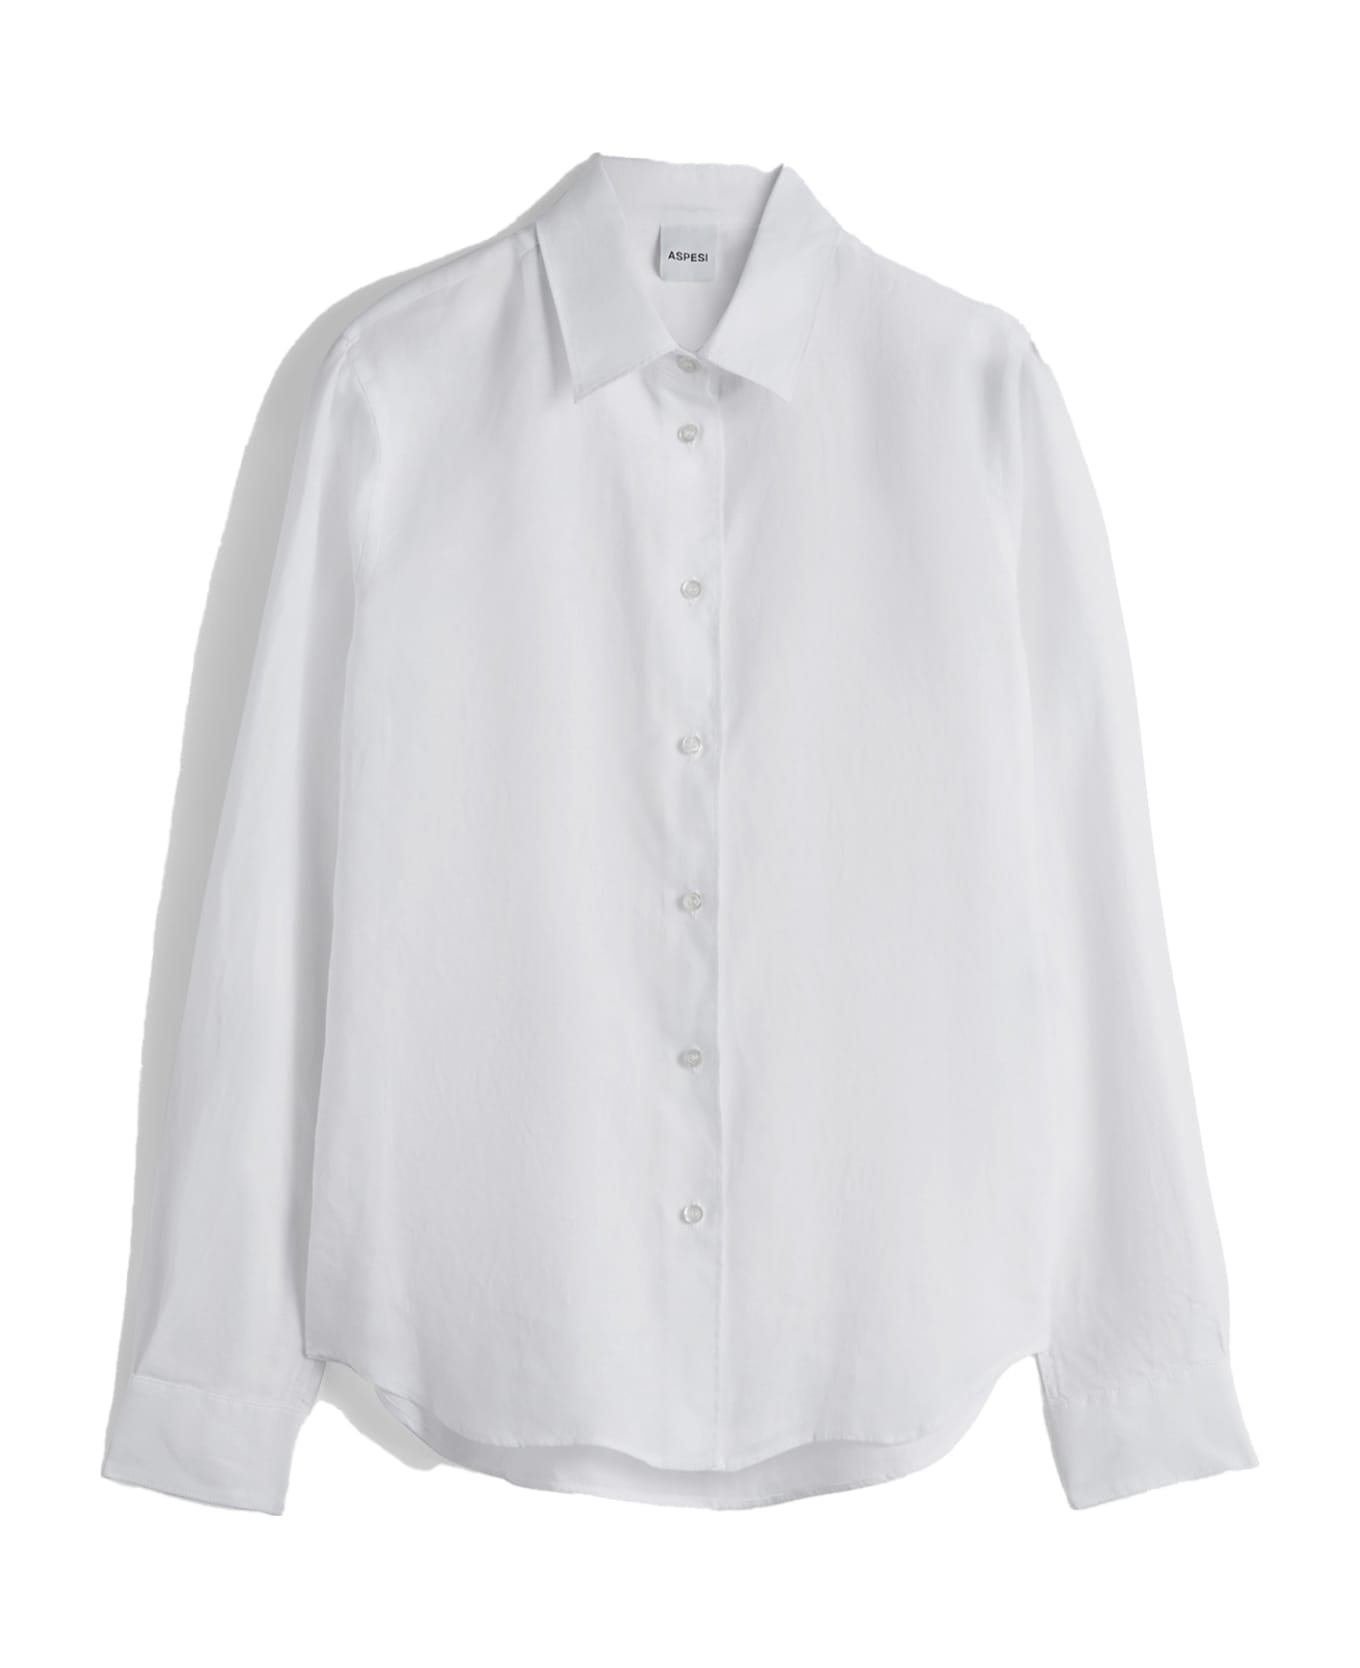 Aspesi White Long-sleeved Shirt - BIANCO